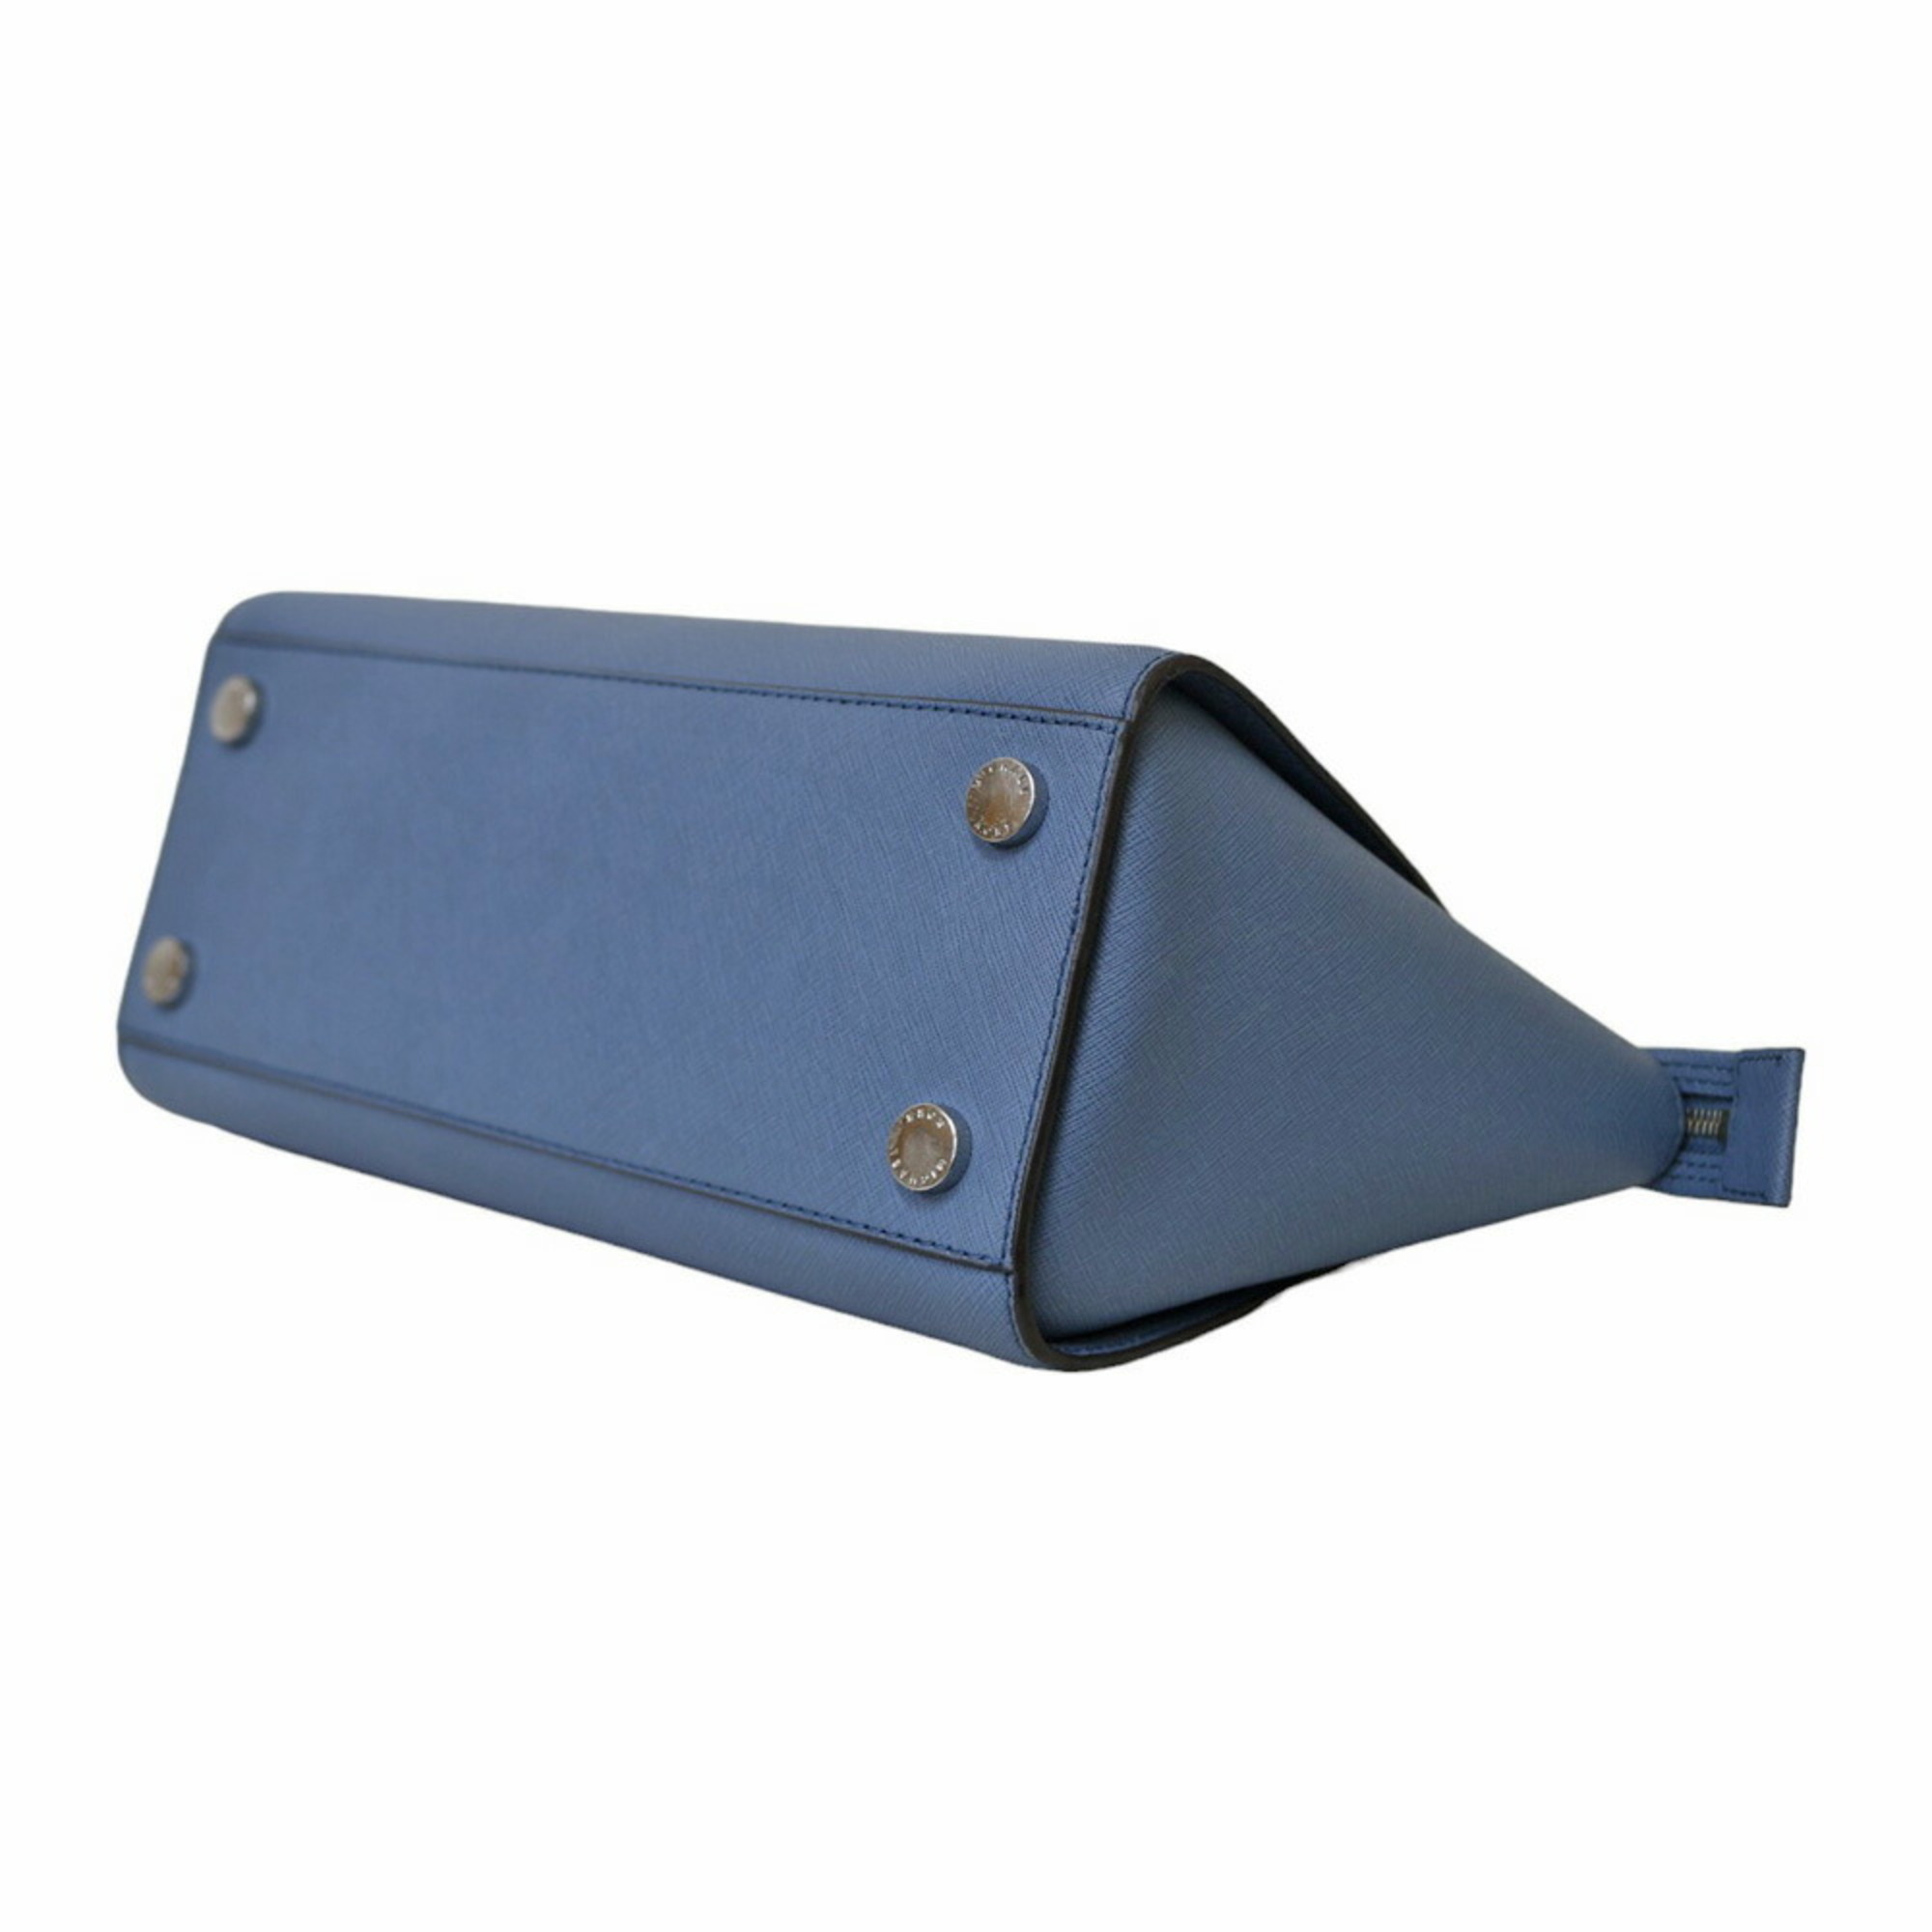 Michael Kors Shoulder Bag Leather Blue Women's 2way